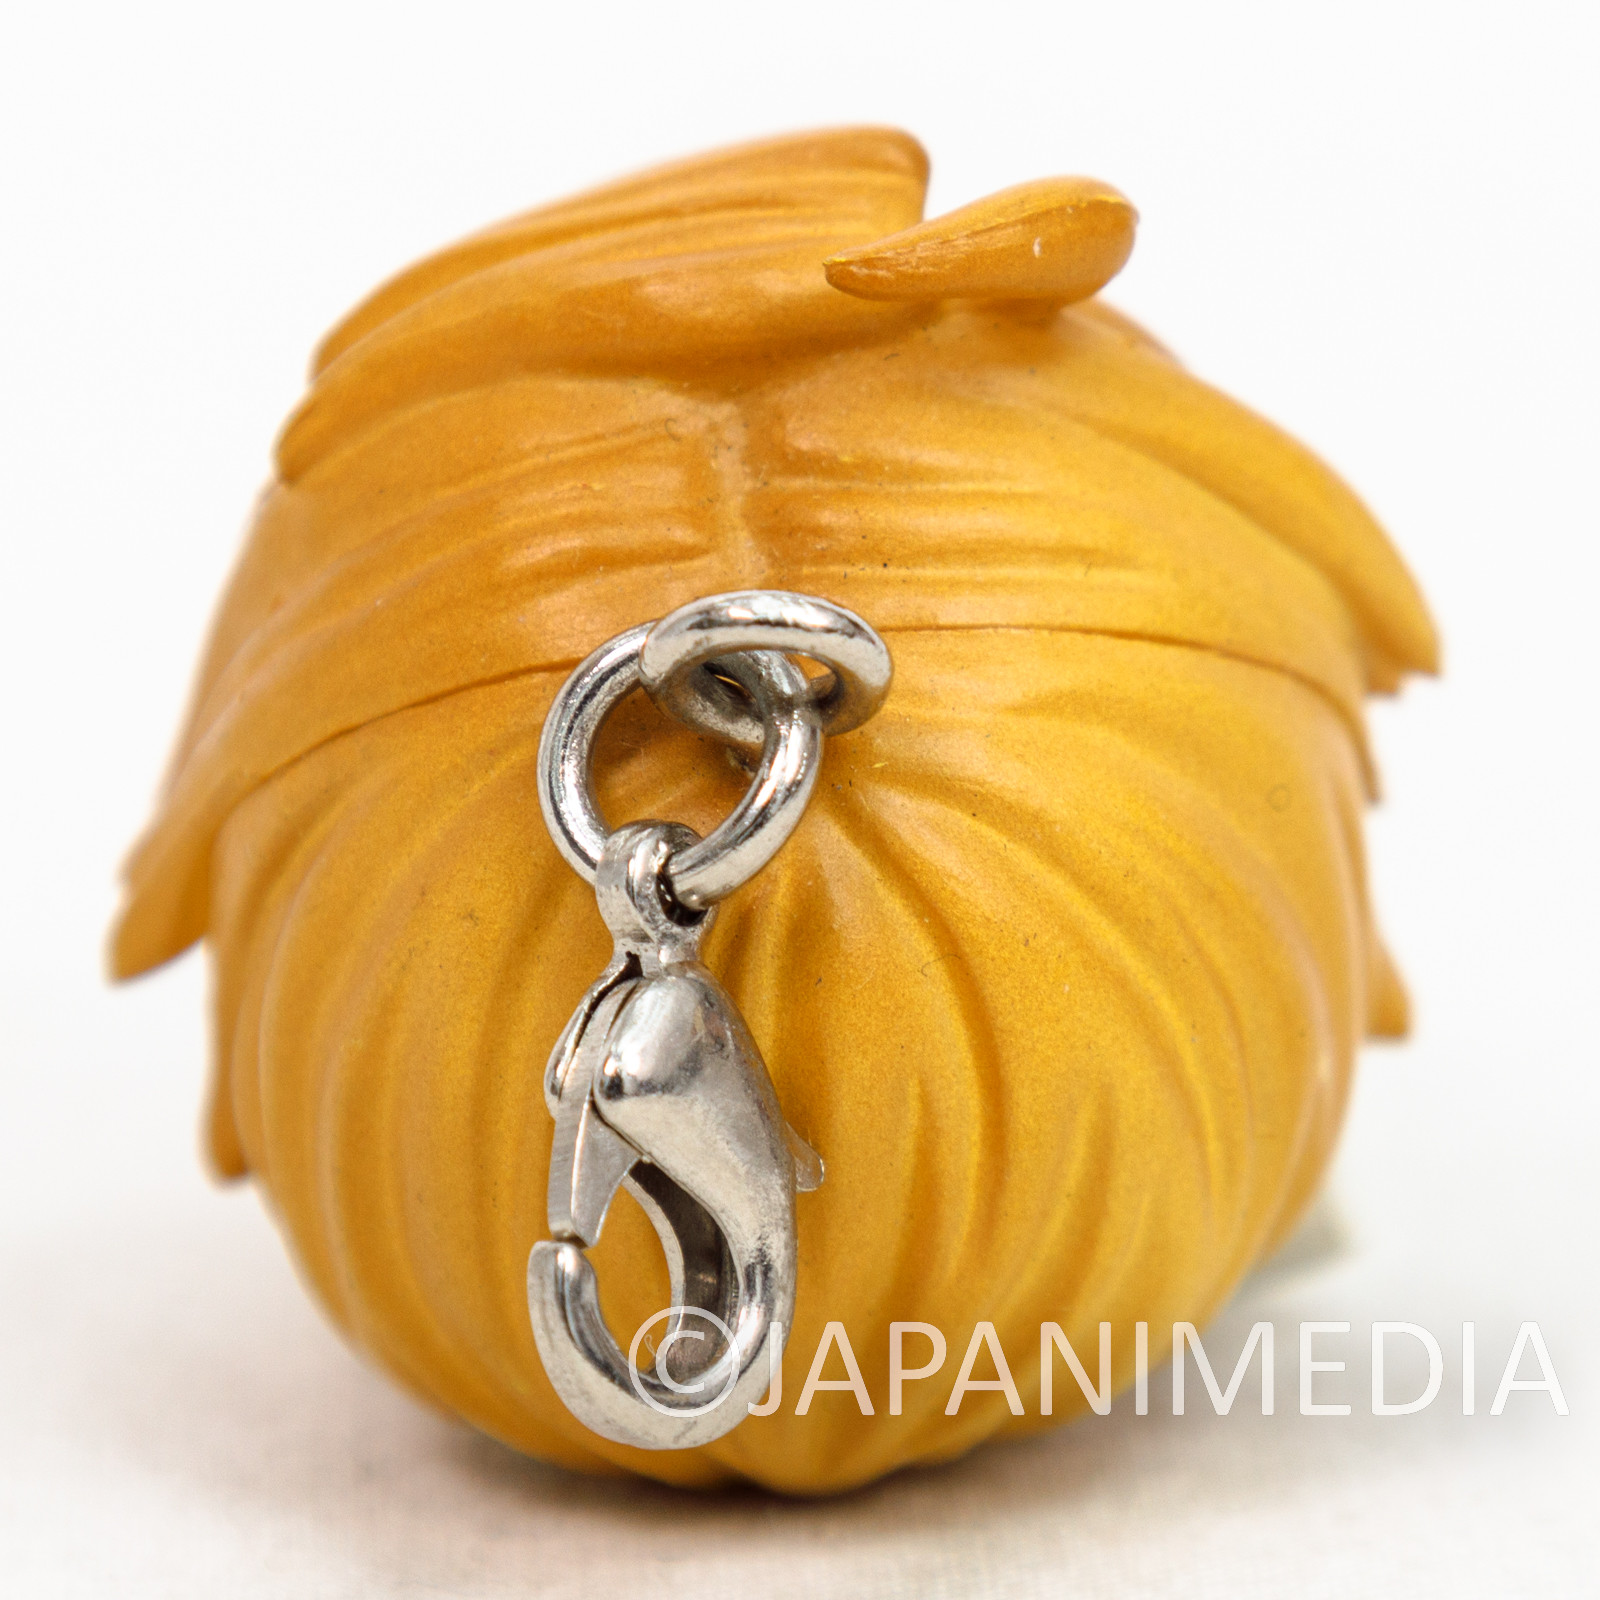 SAIYUKI Genjo Sanzo KaraCole Mascot Figure Movic JAPAN